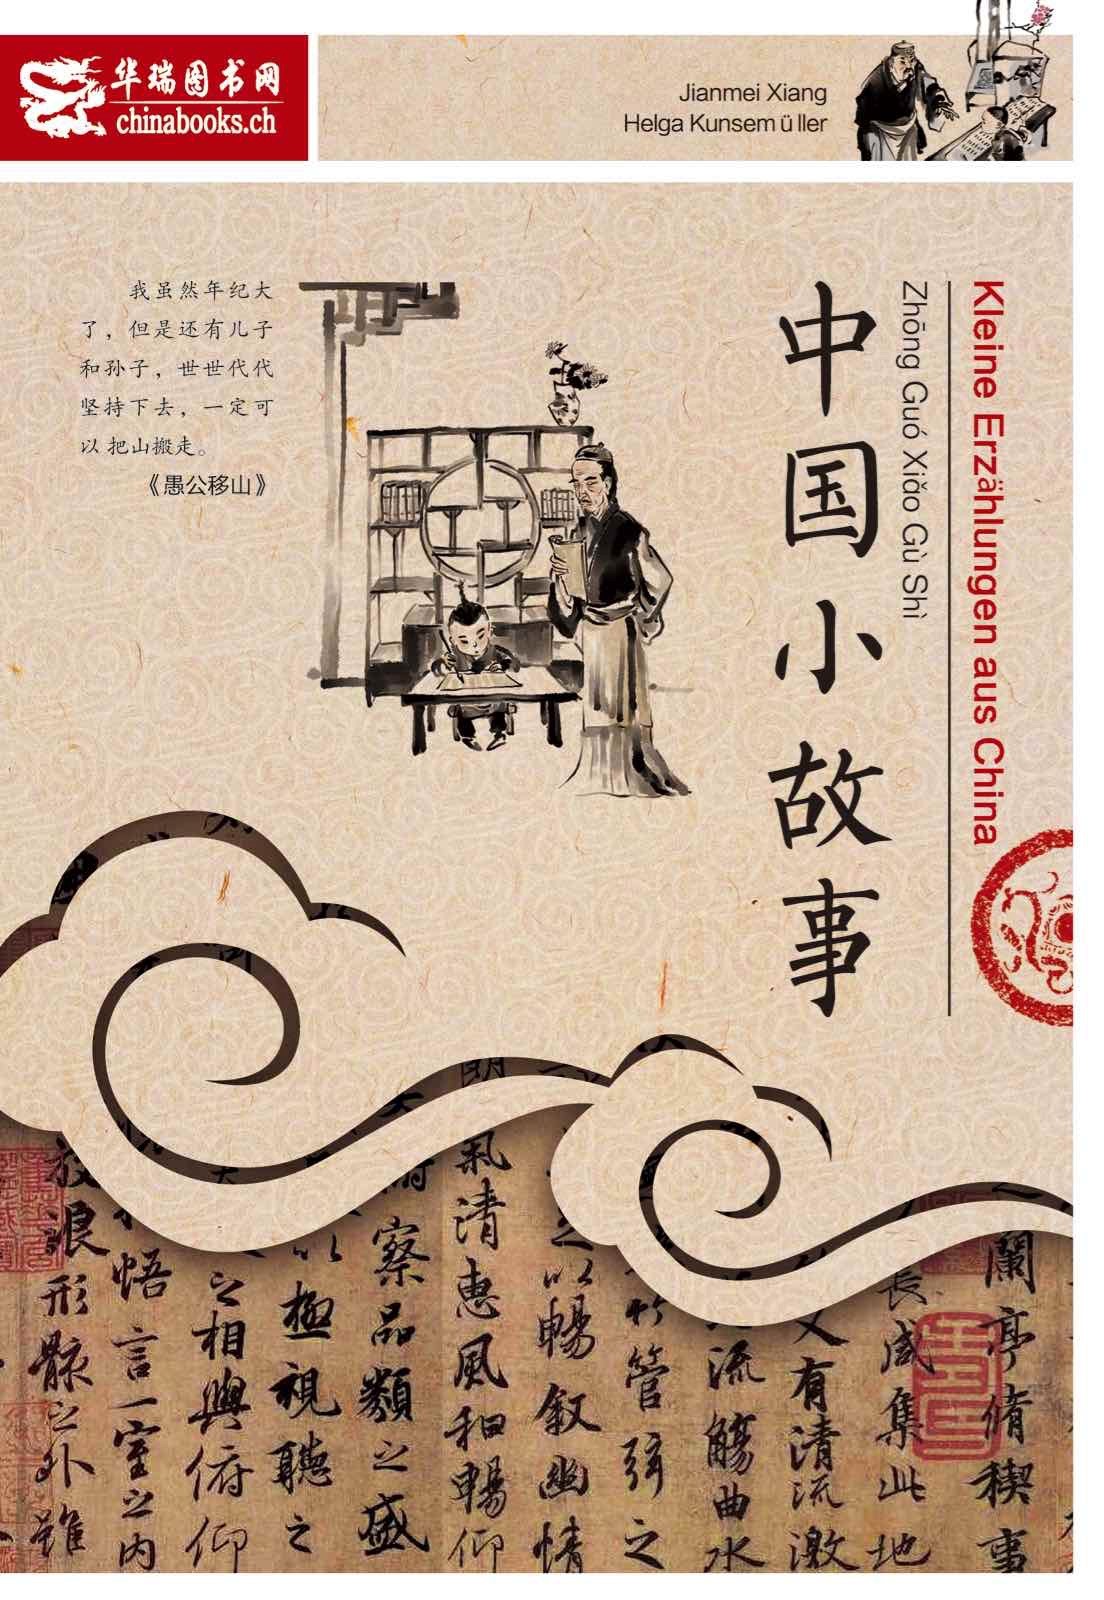 中国小故事 Kleine Erz鄣lungen aus China - f�r Chinesischlernende (汉德对照)<br>ISBN:978-3-905816-70-9, 9783905816709